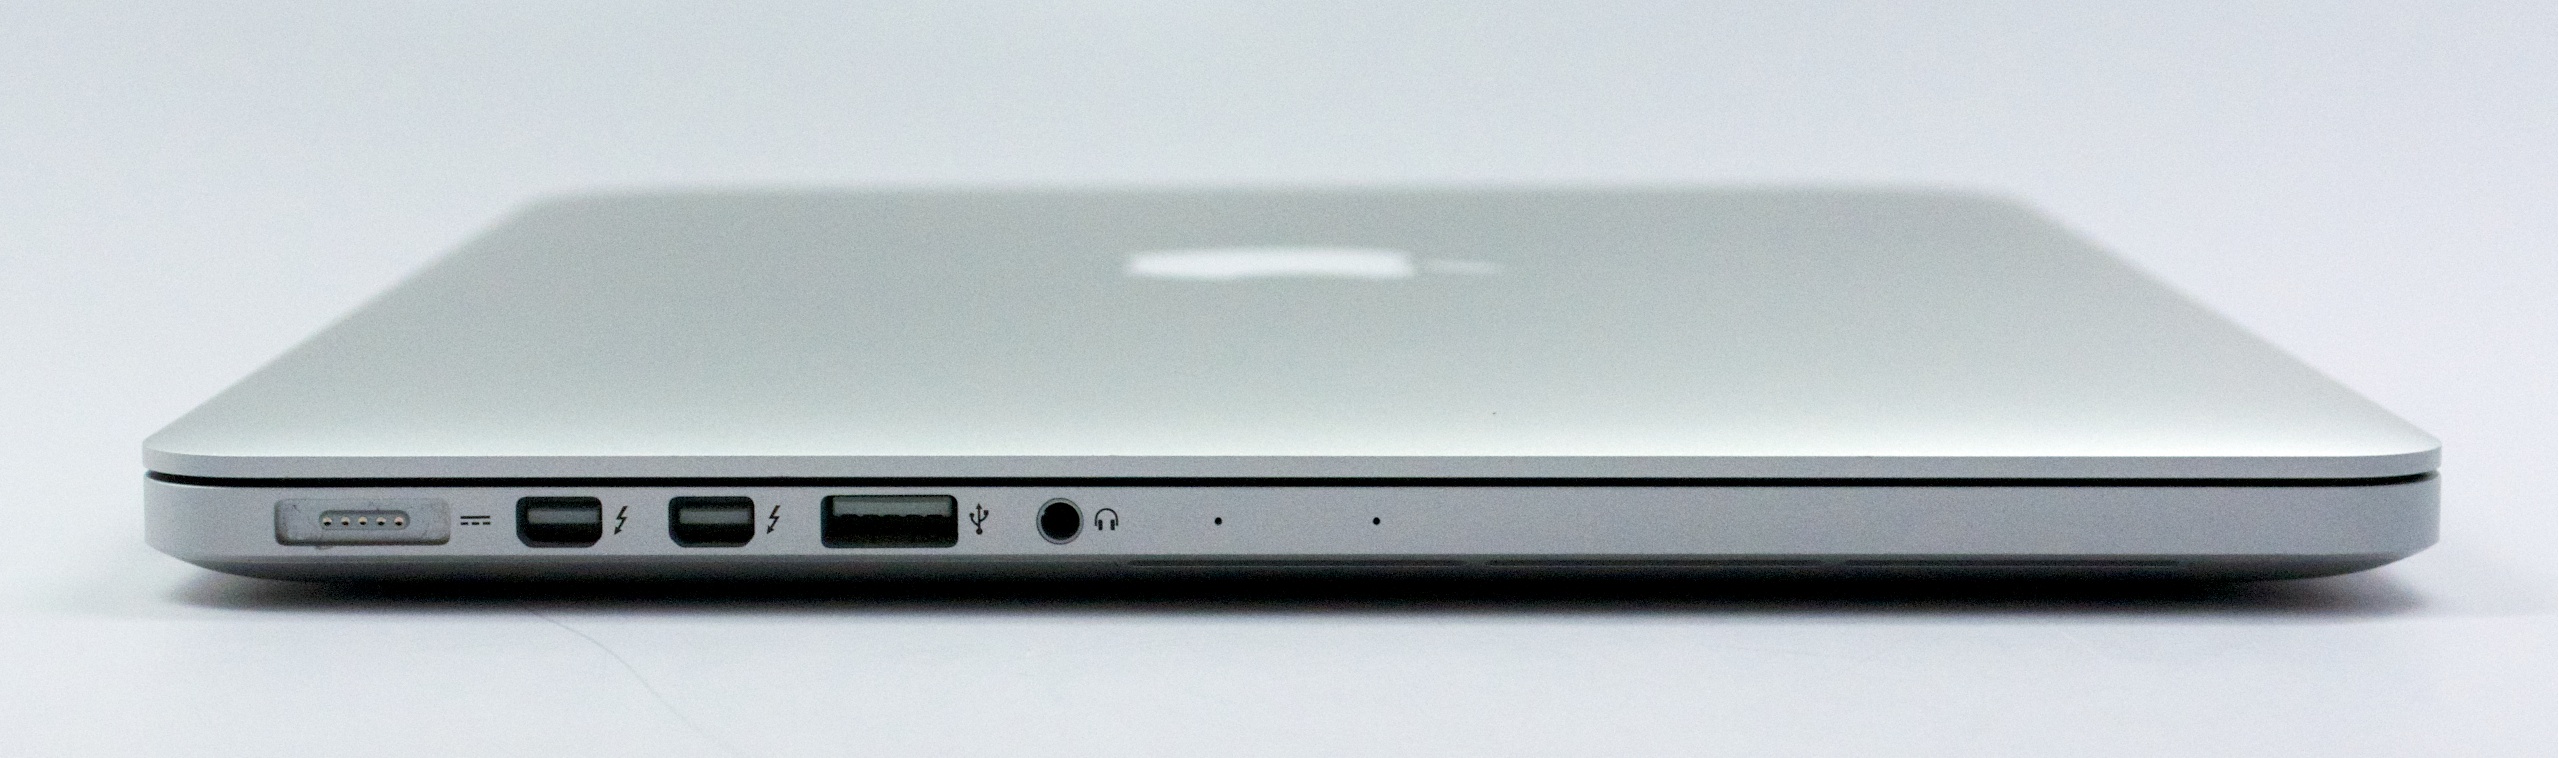 13-inch-MacBook-Pro-Retina